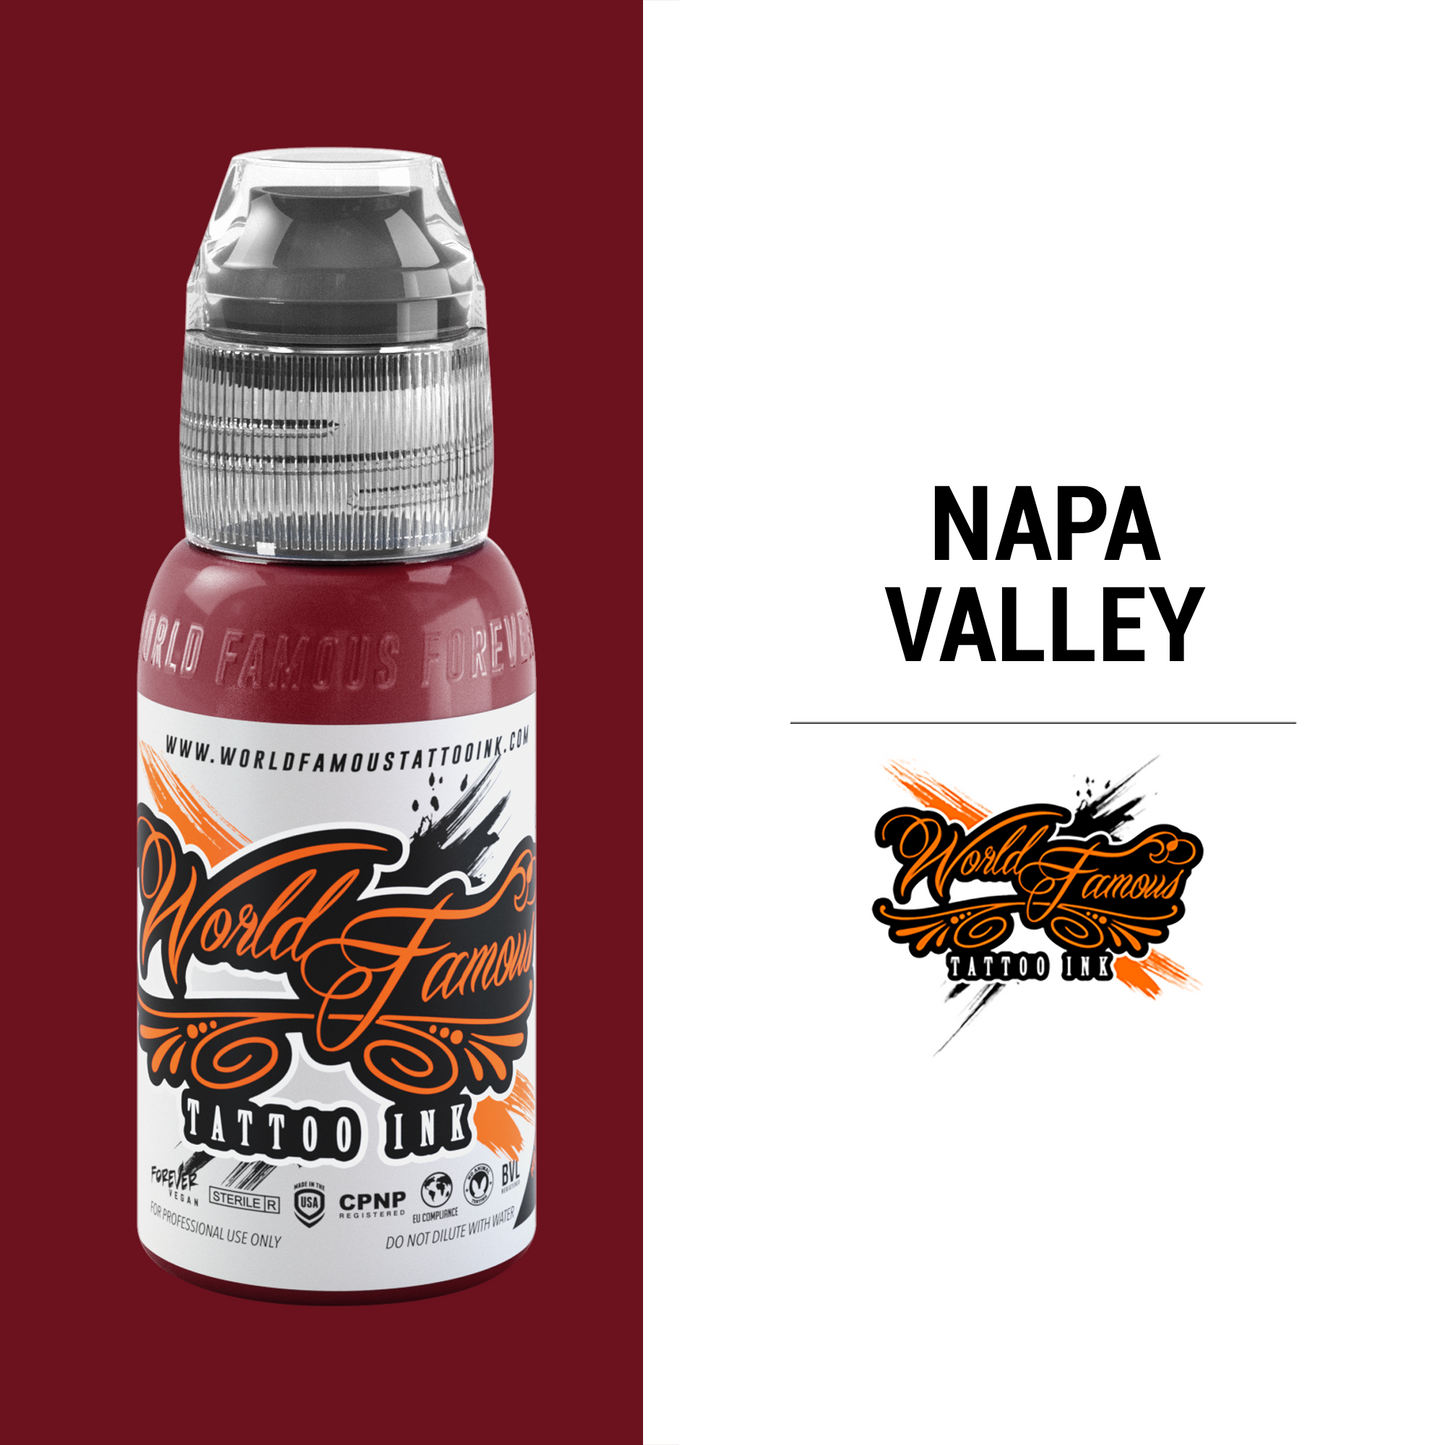 Napa Valley - World Famous Tattoo Ink